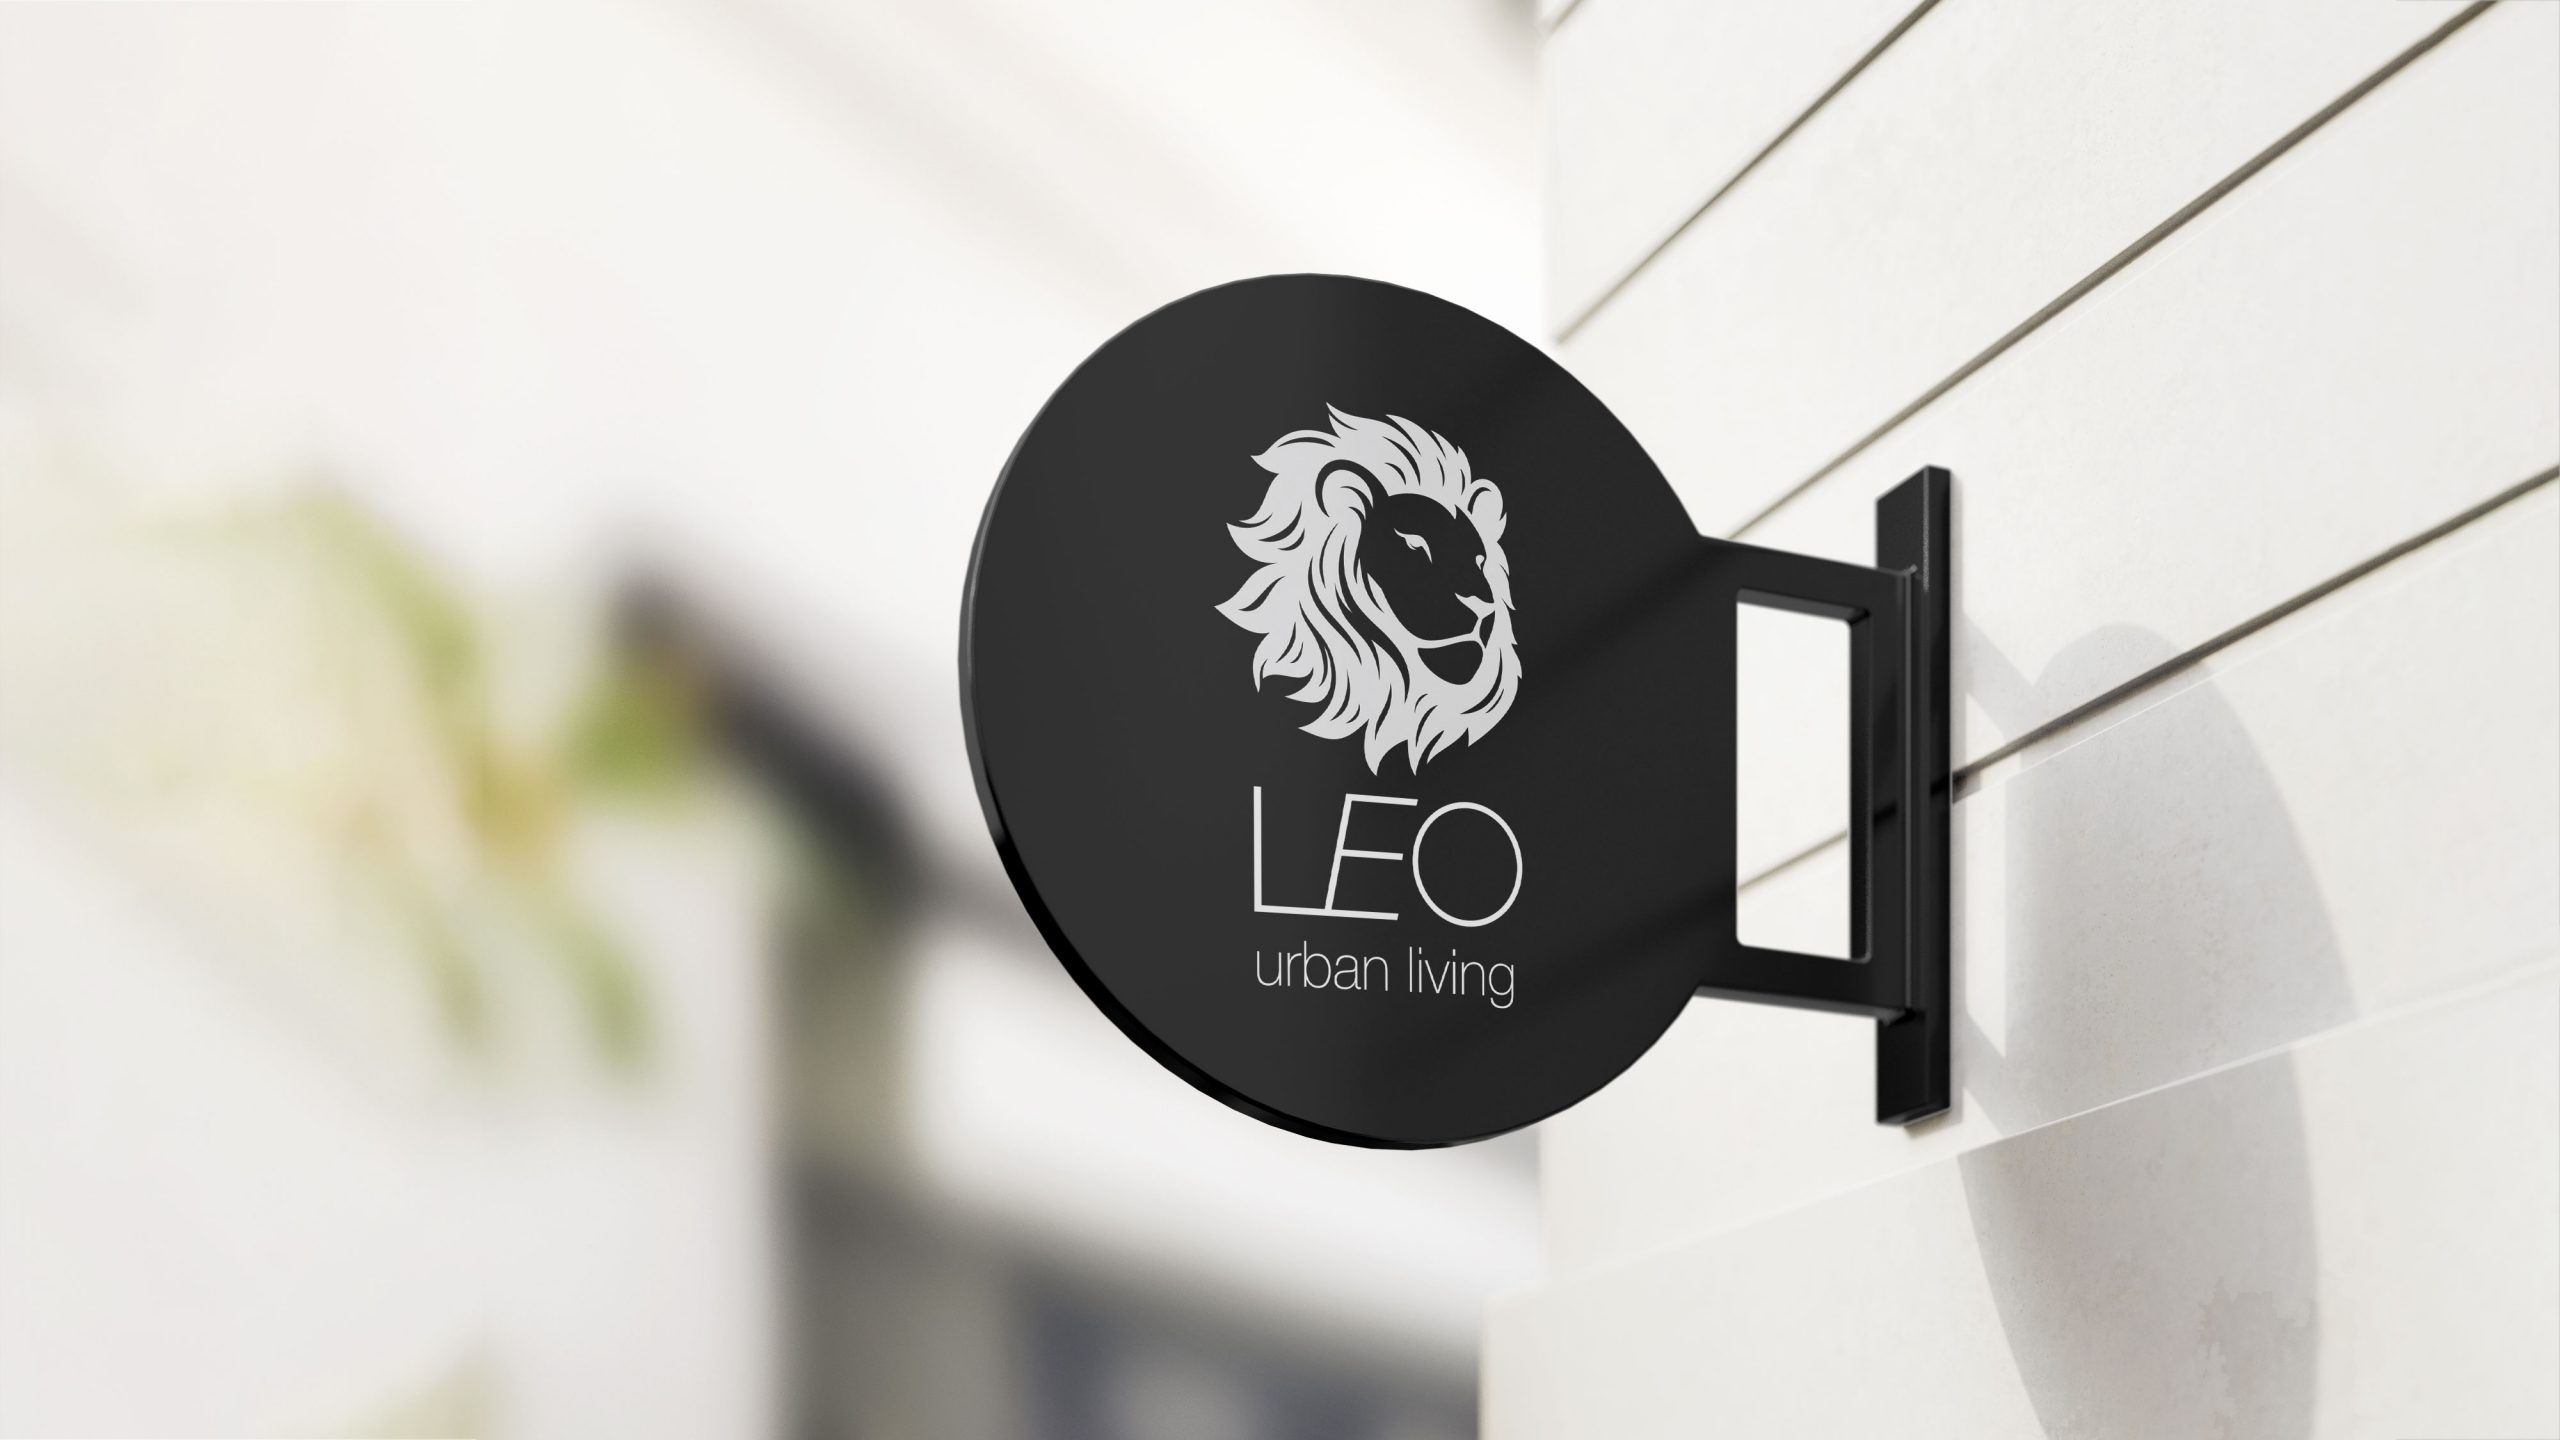 Leo_Loewenkopf_Hausfassade